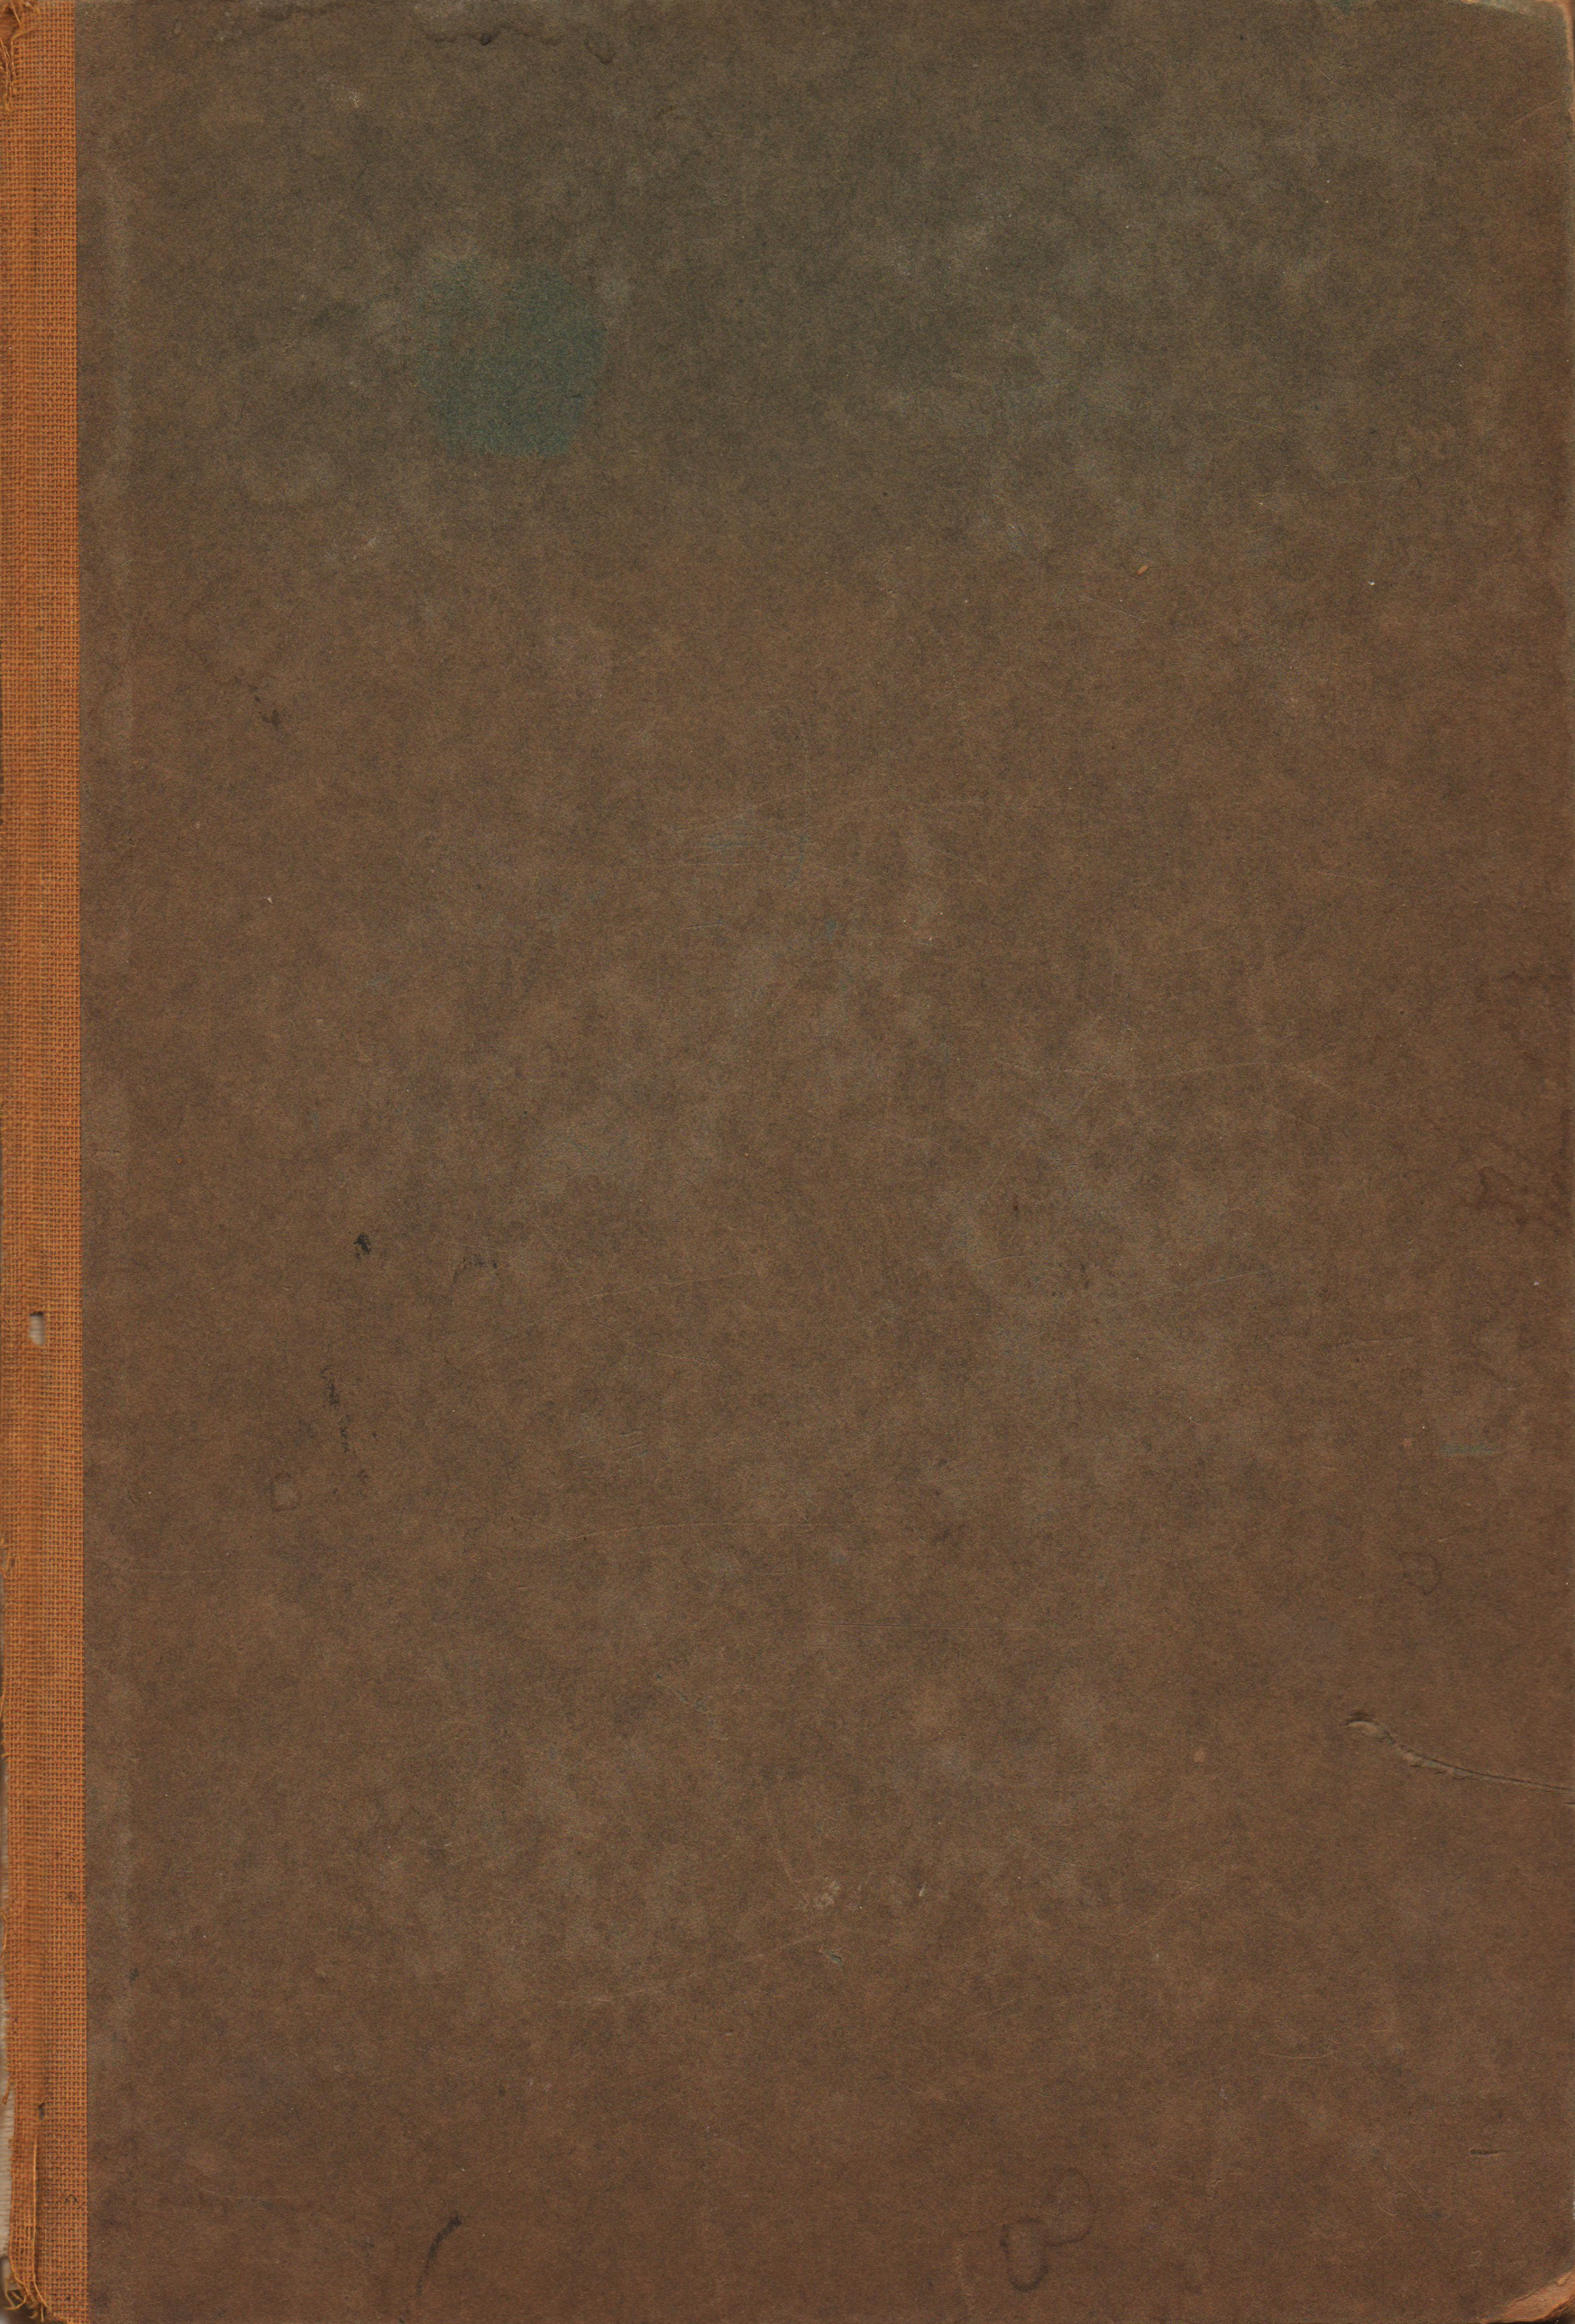 Vintage book texture photo